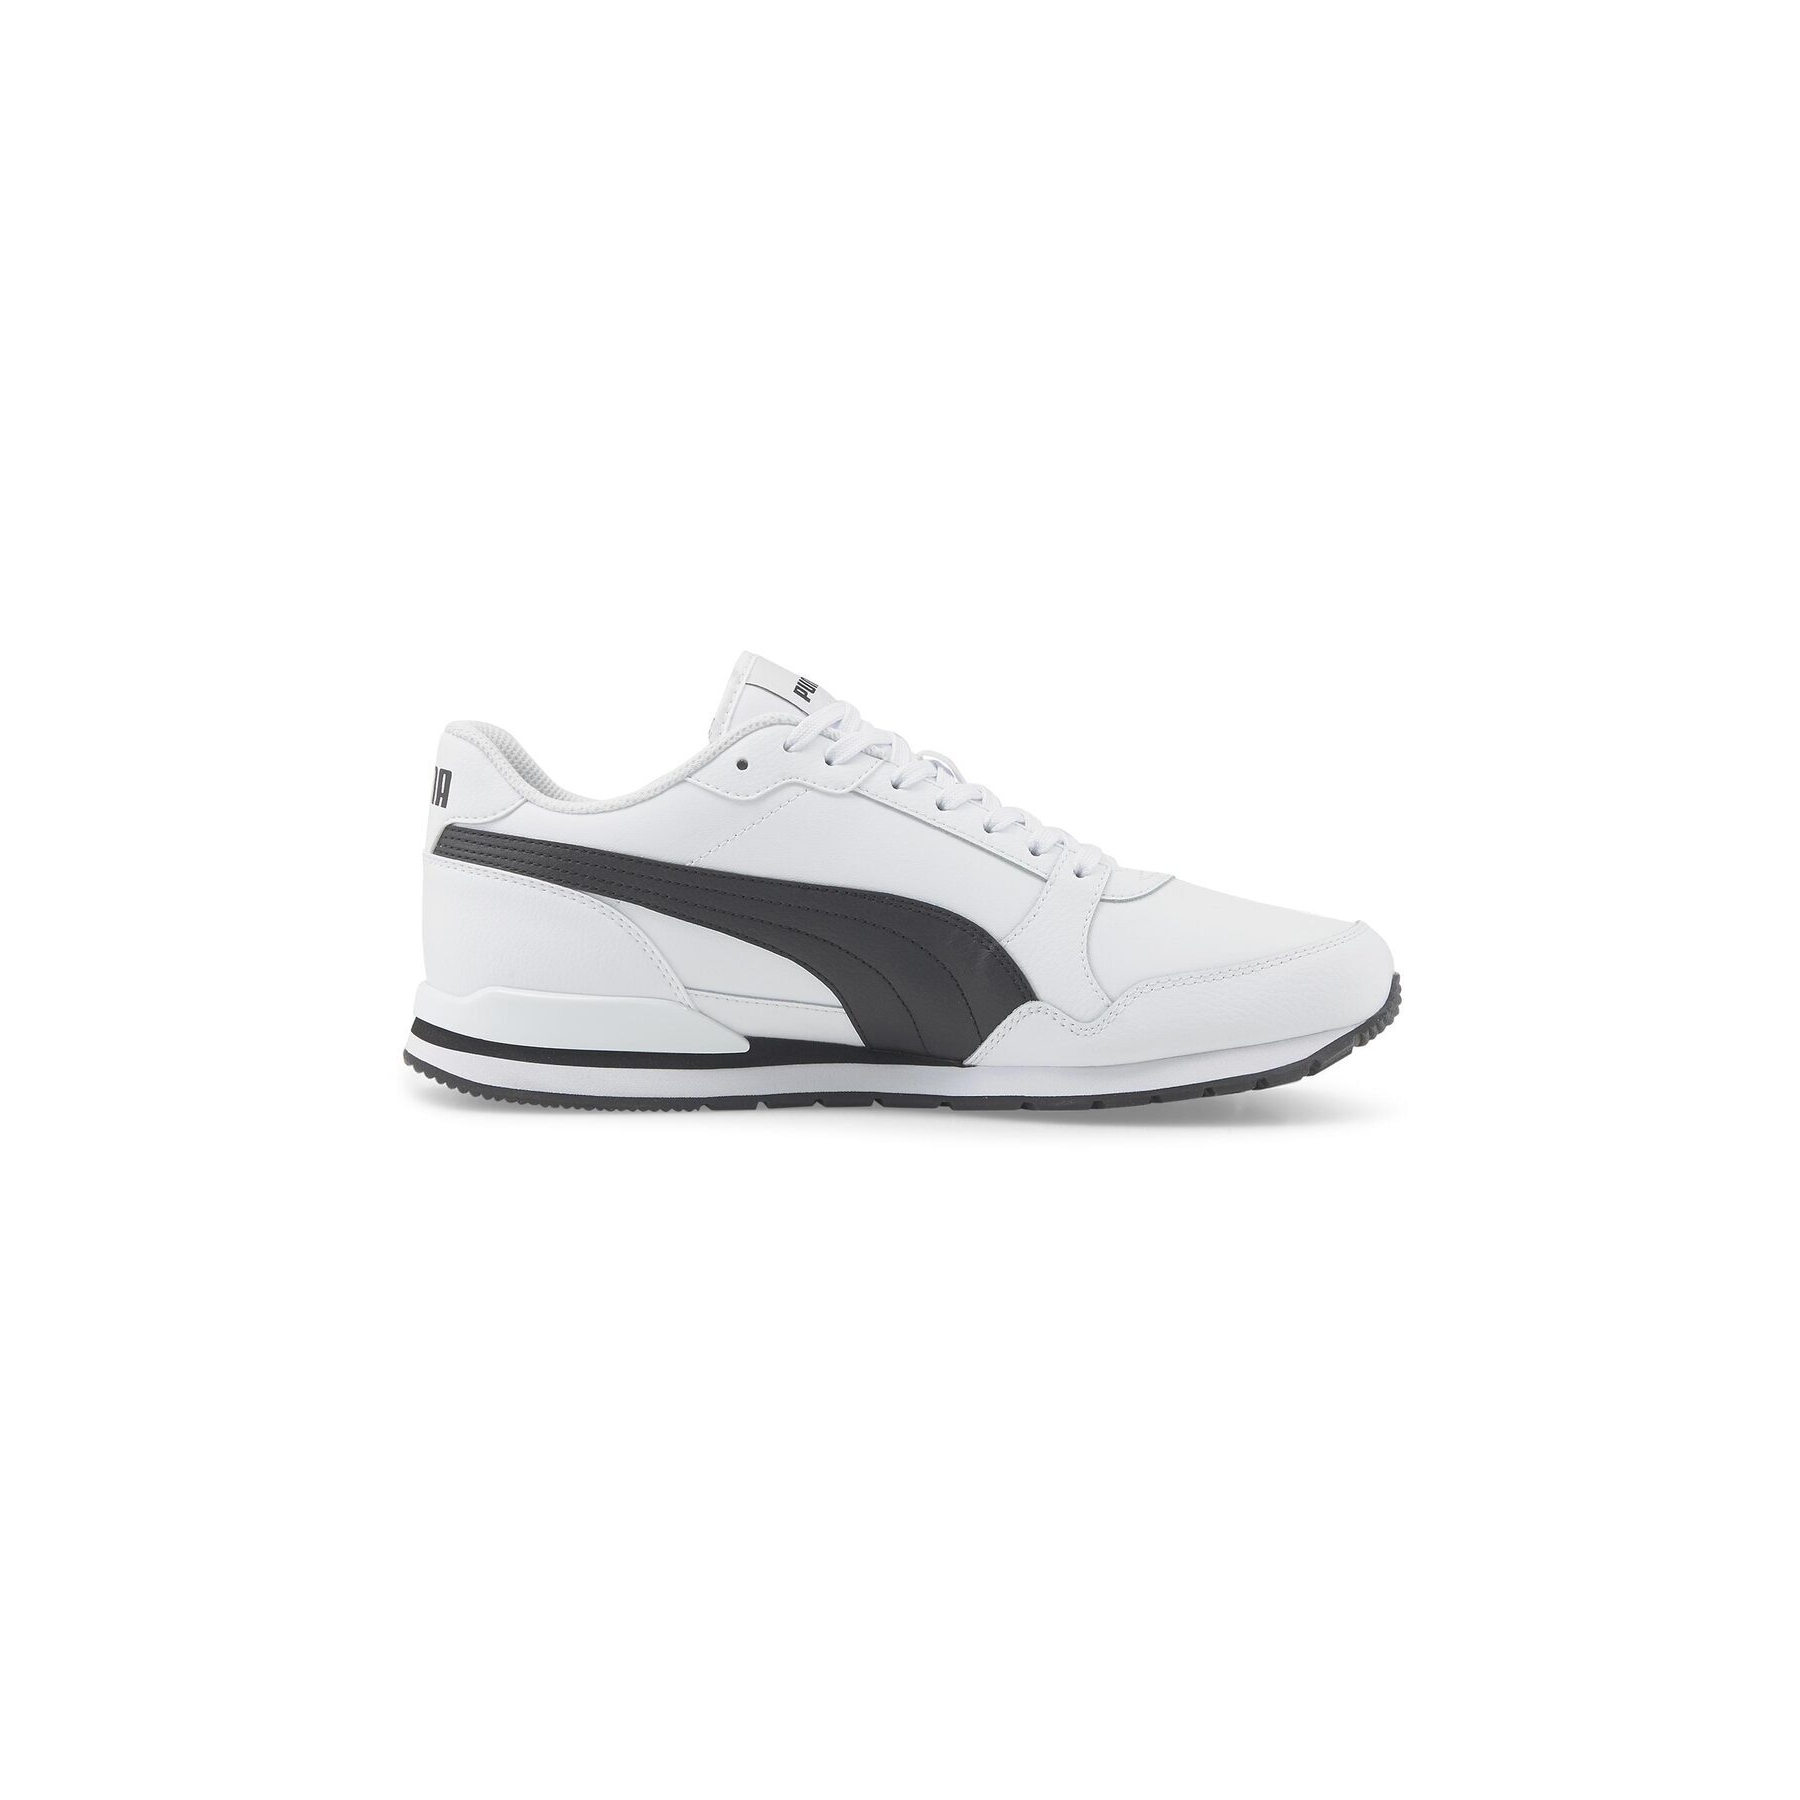 Puma Runner V3 Beyaz Spor Ayakkabı (384855-09)